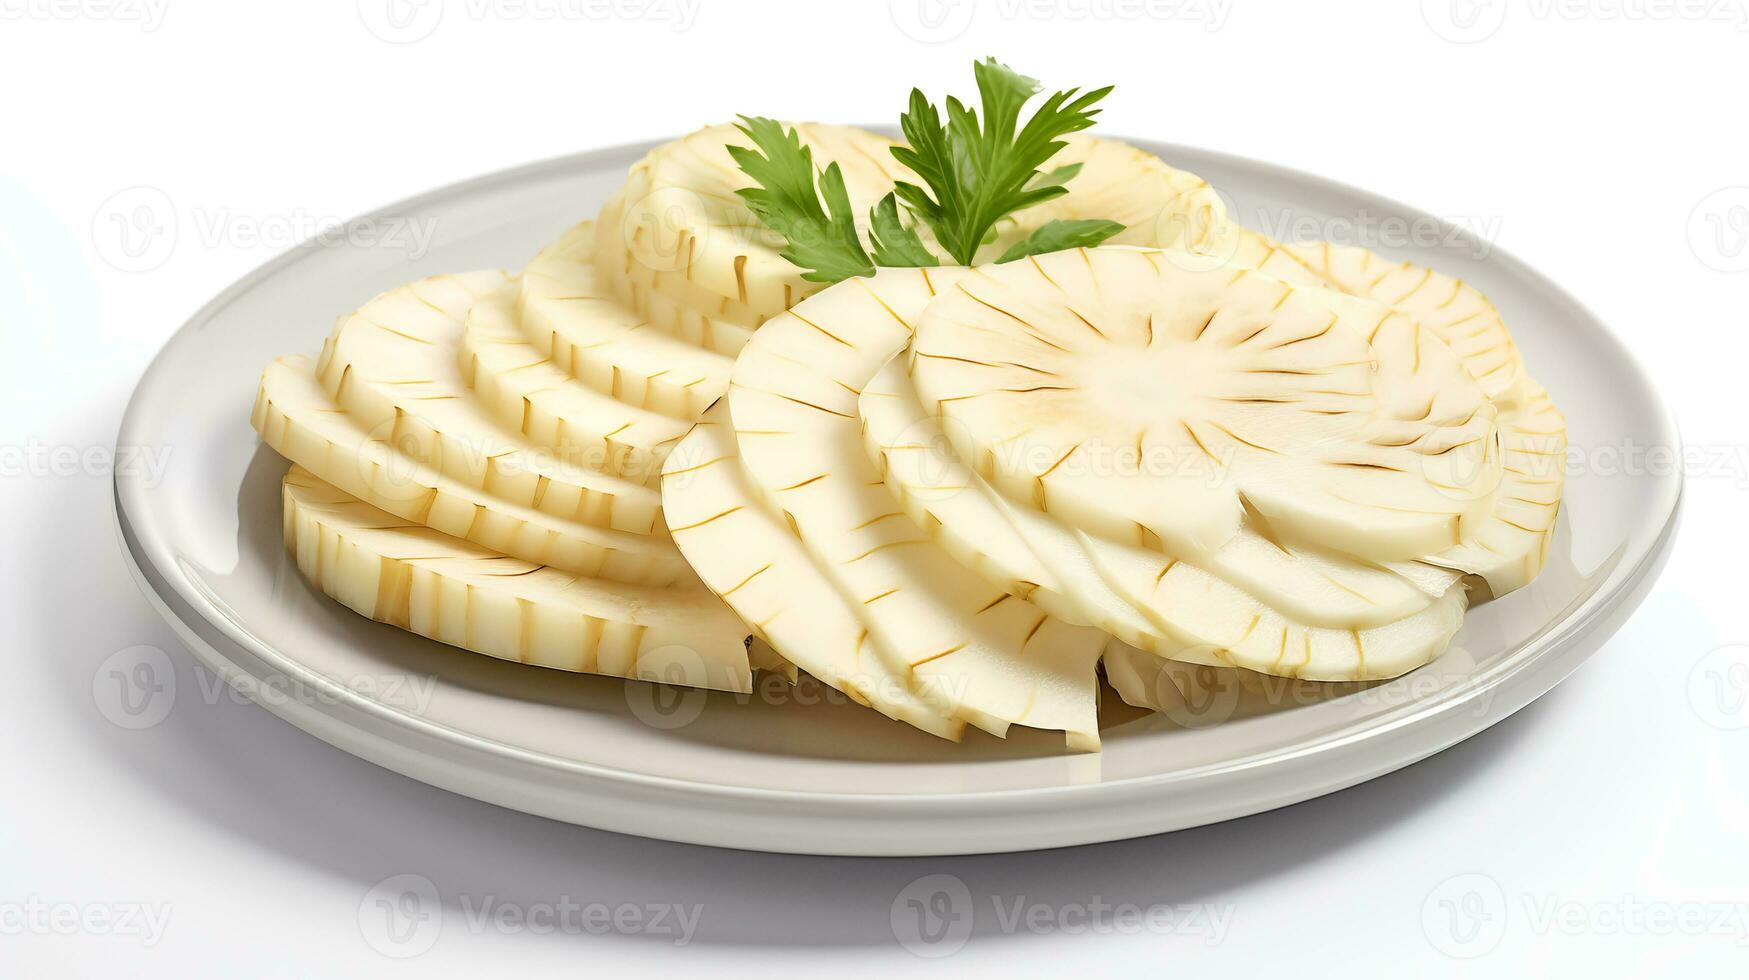 Photo of sliced Celeriac on plate isolated on white background